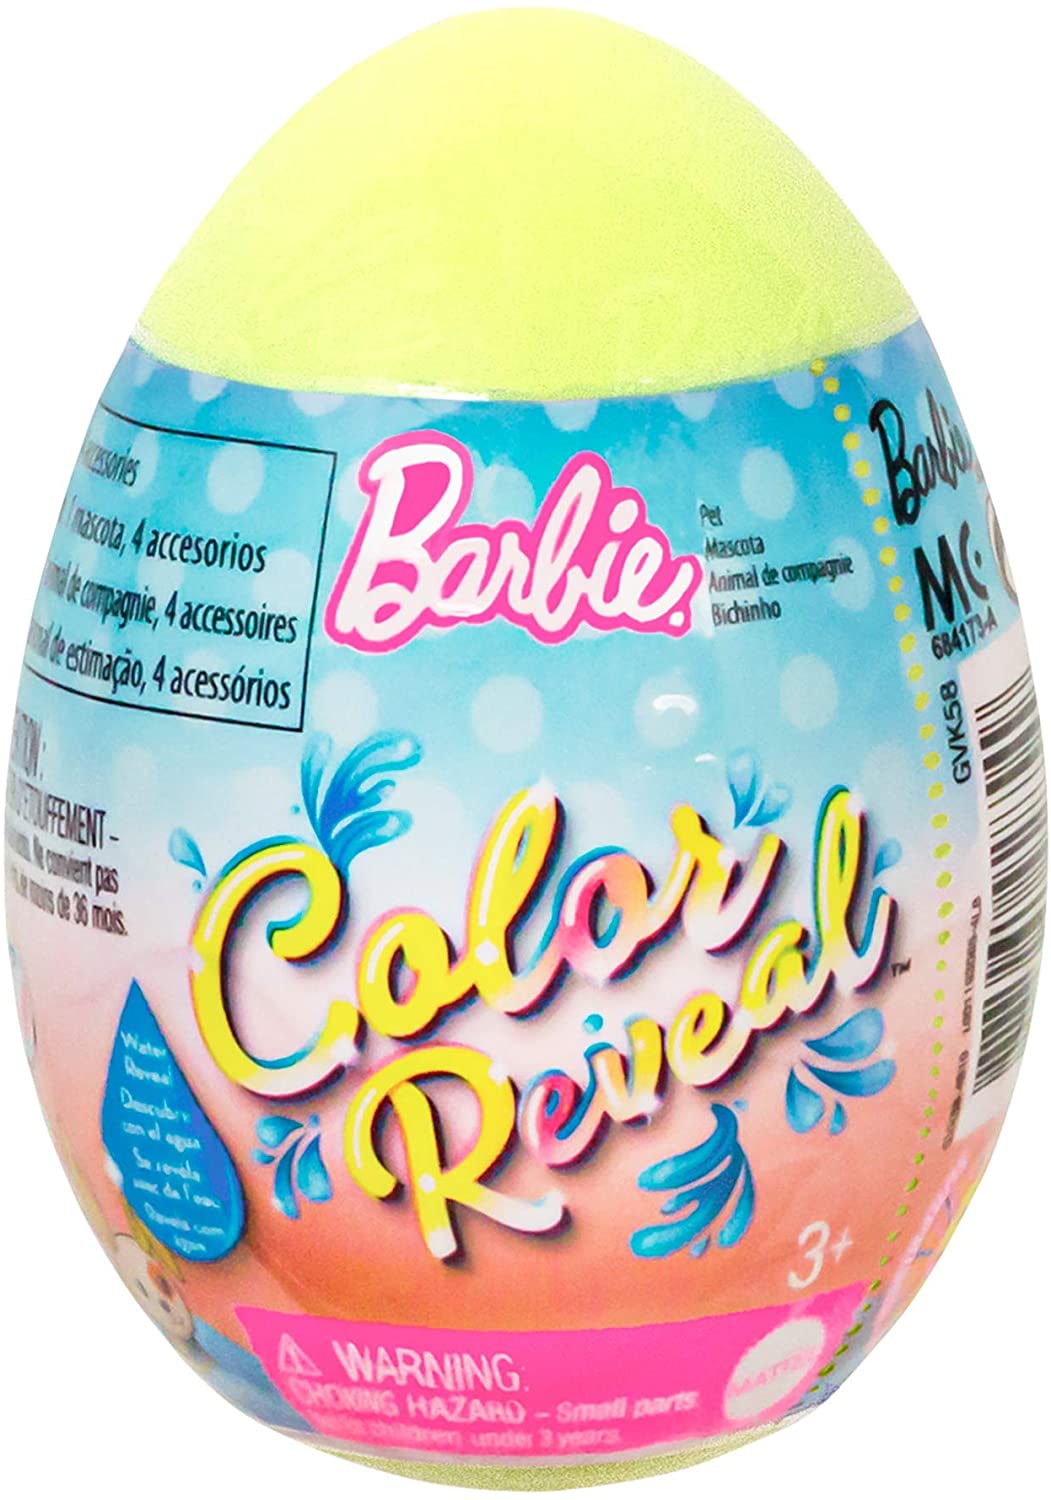 Barbie: Color Reveal Easter Egg (Assortment)